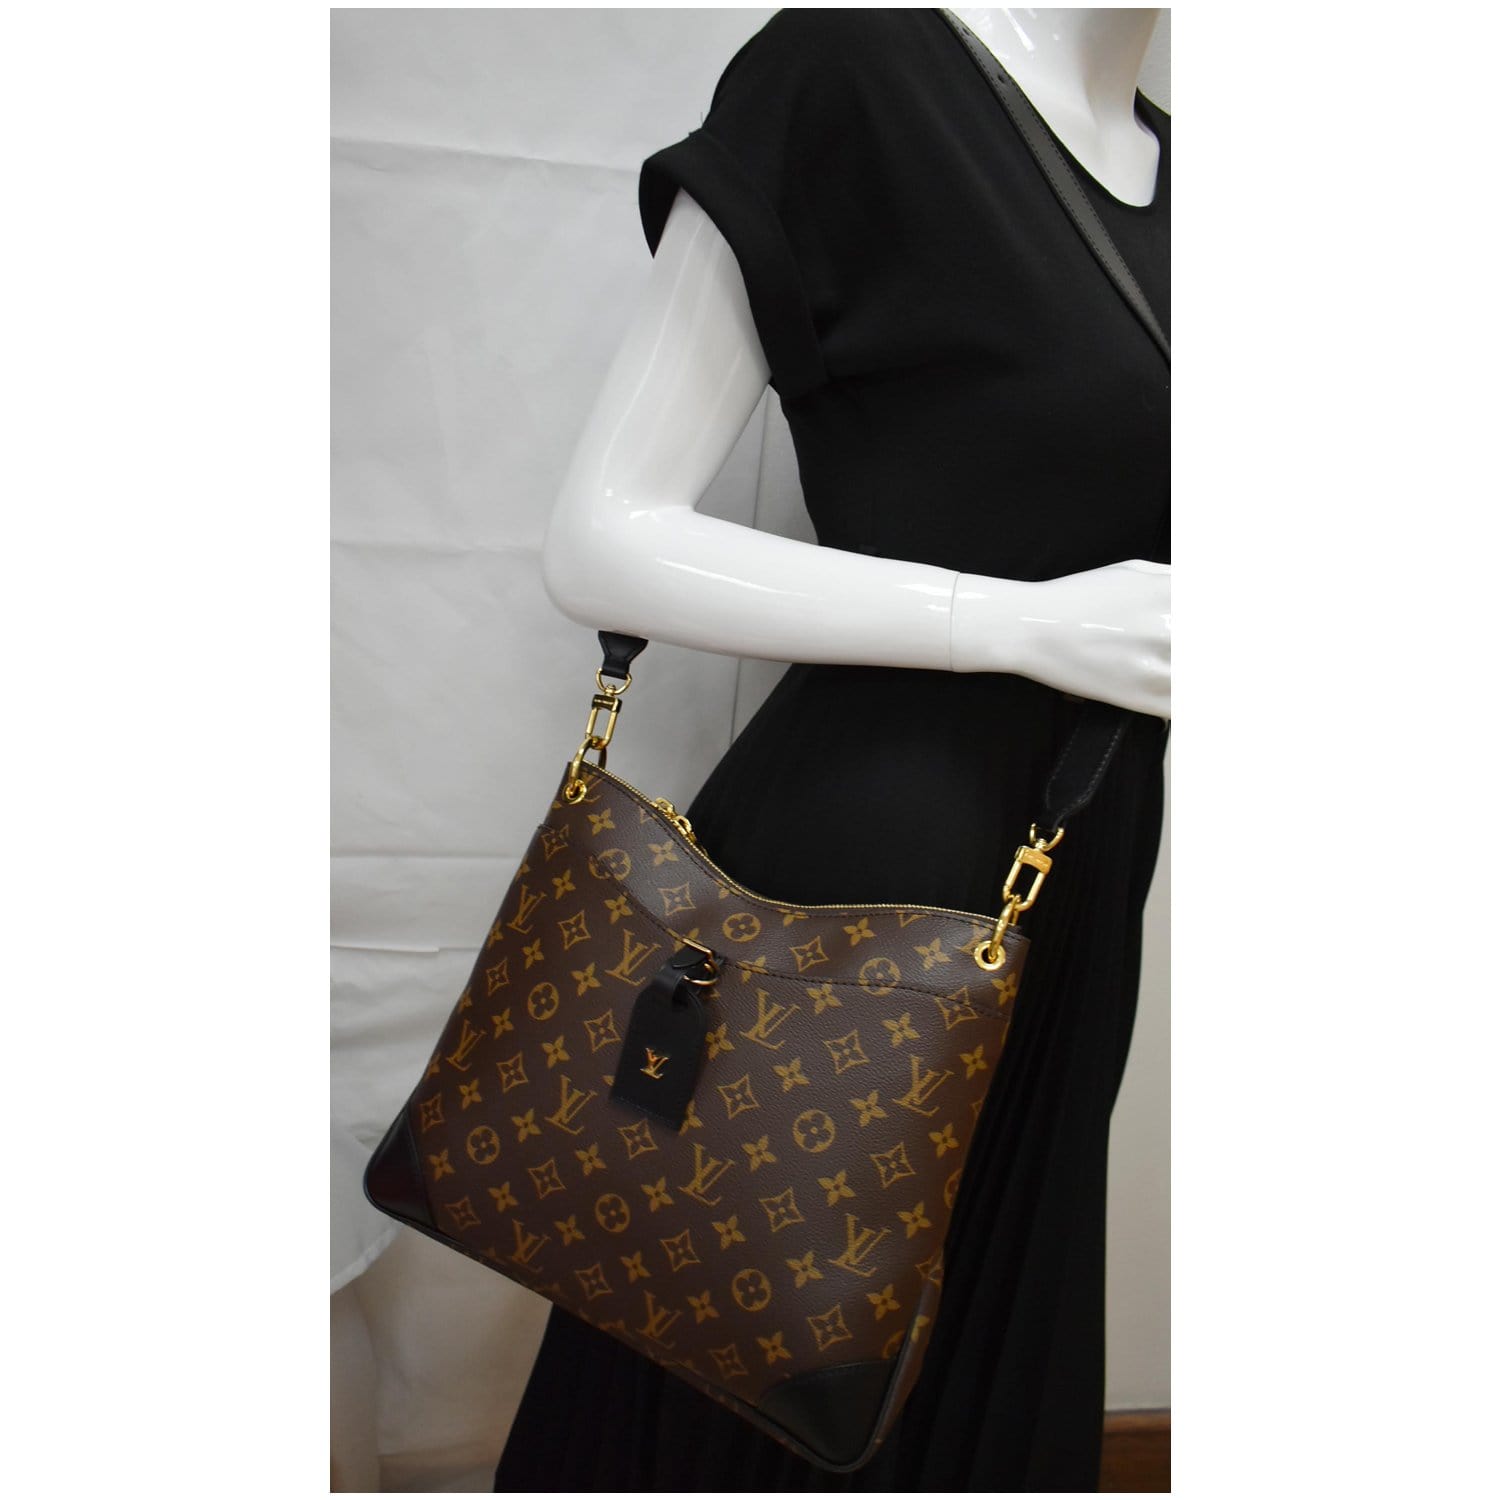 Buy Louis Vuitton Shoulder Bag in Brown